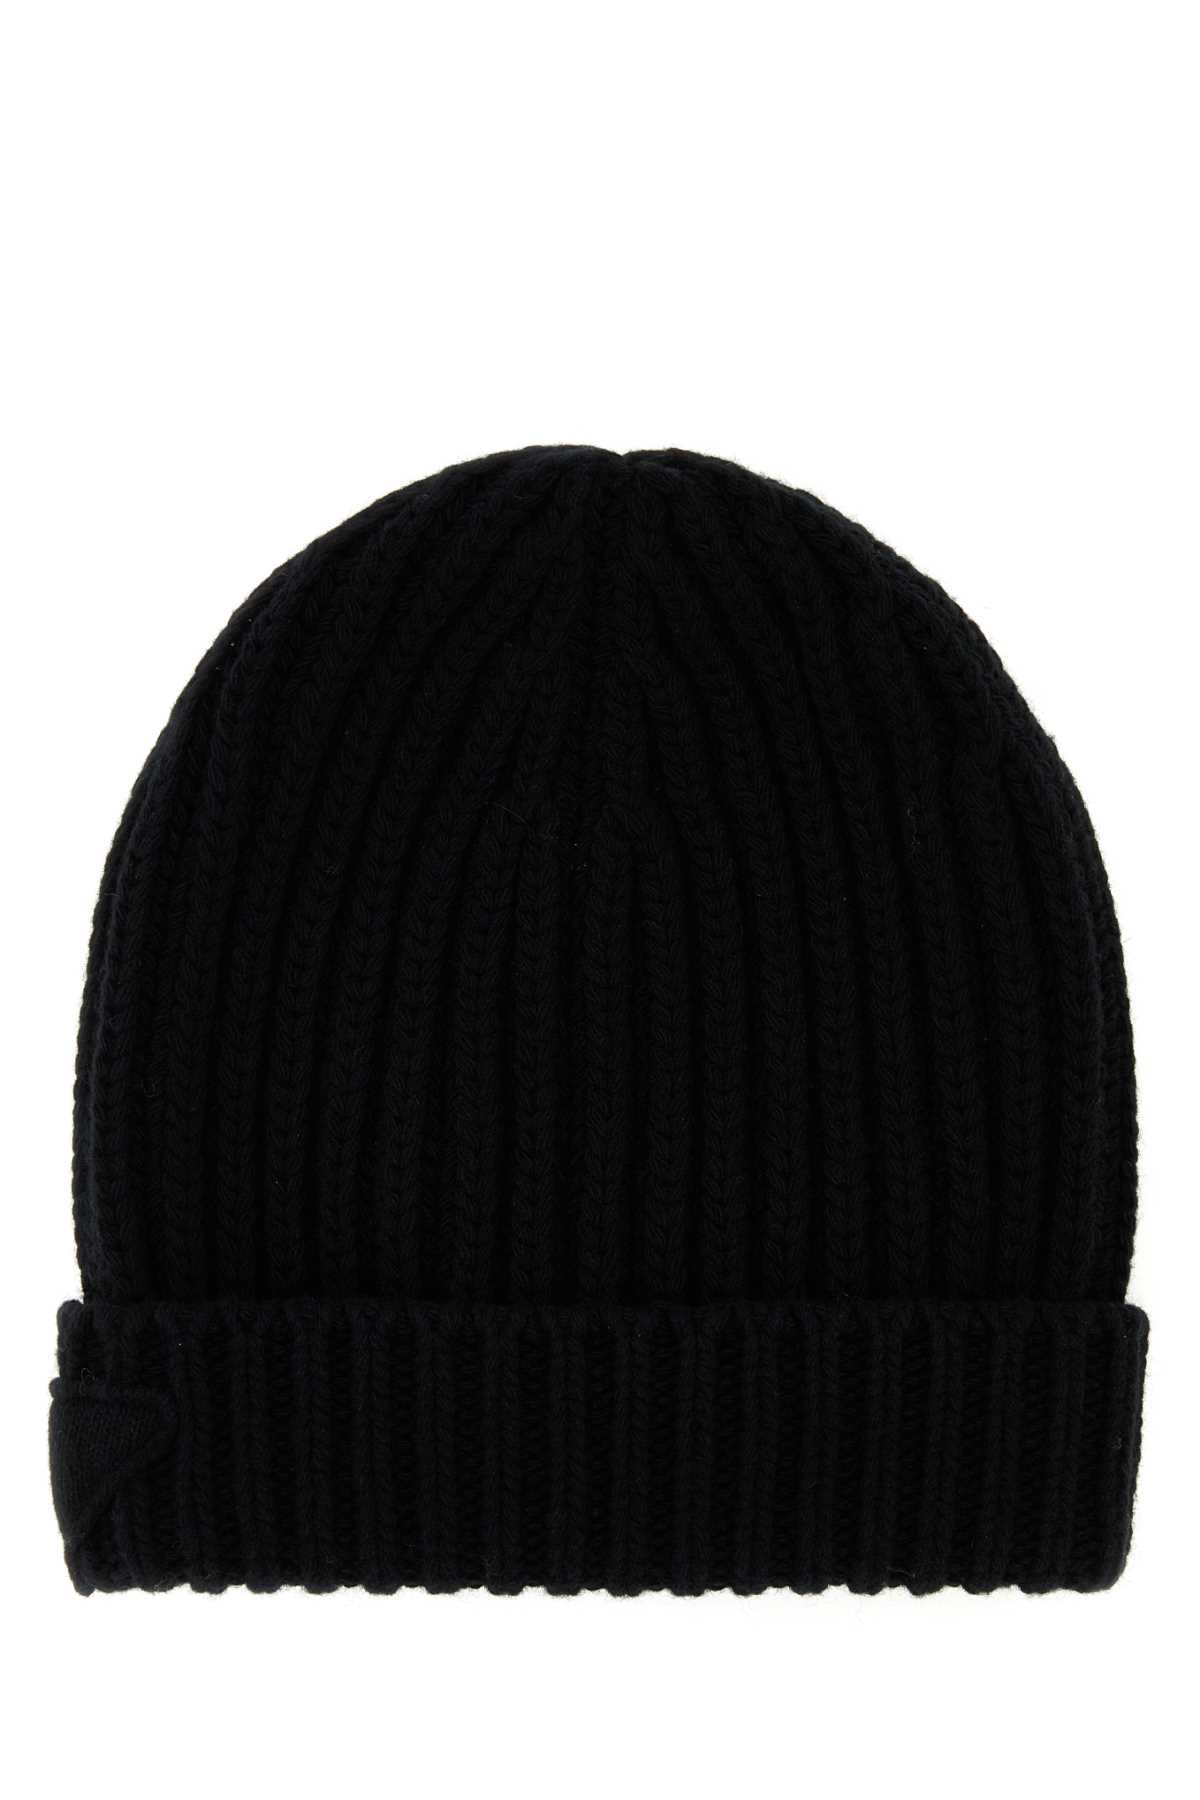 Prada Black Wool Blend Beanie Hat